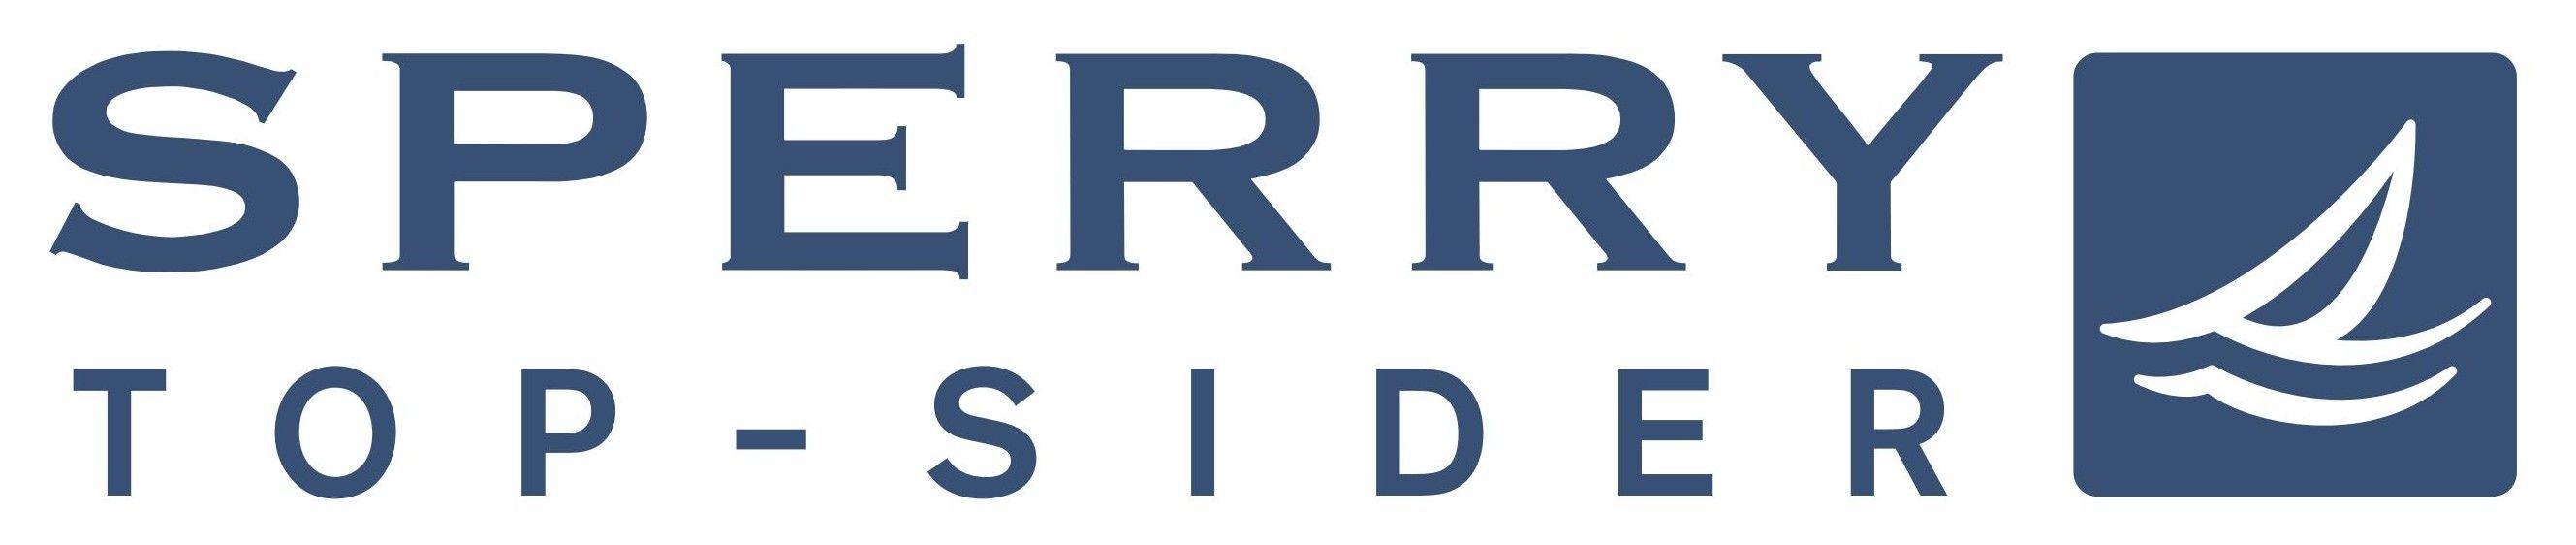 Sperry Top-Sider Logo - LogoDix